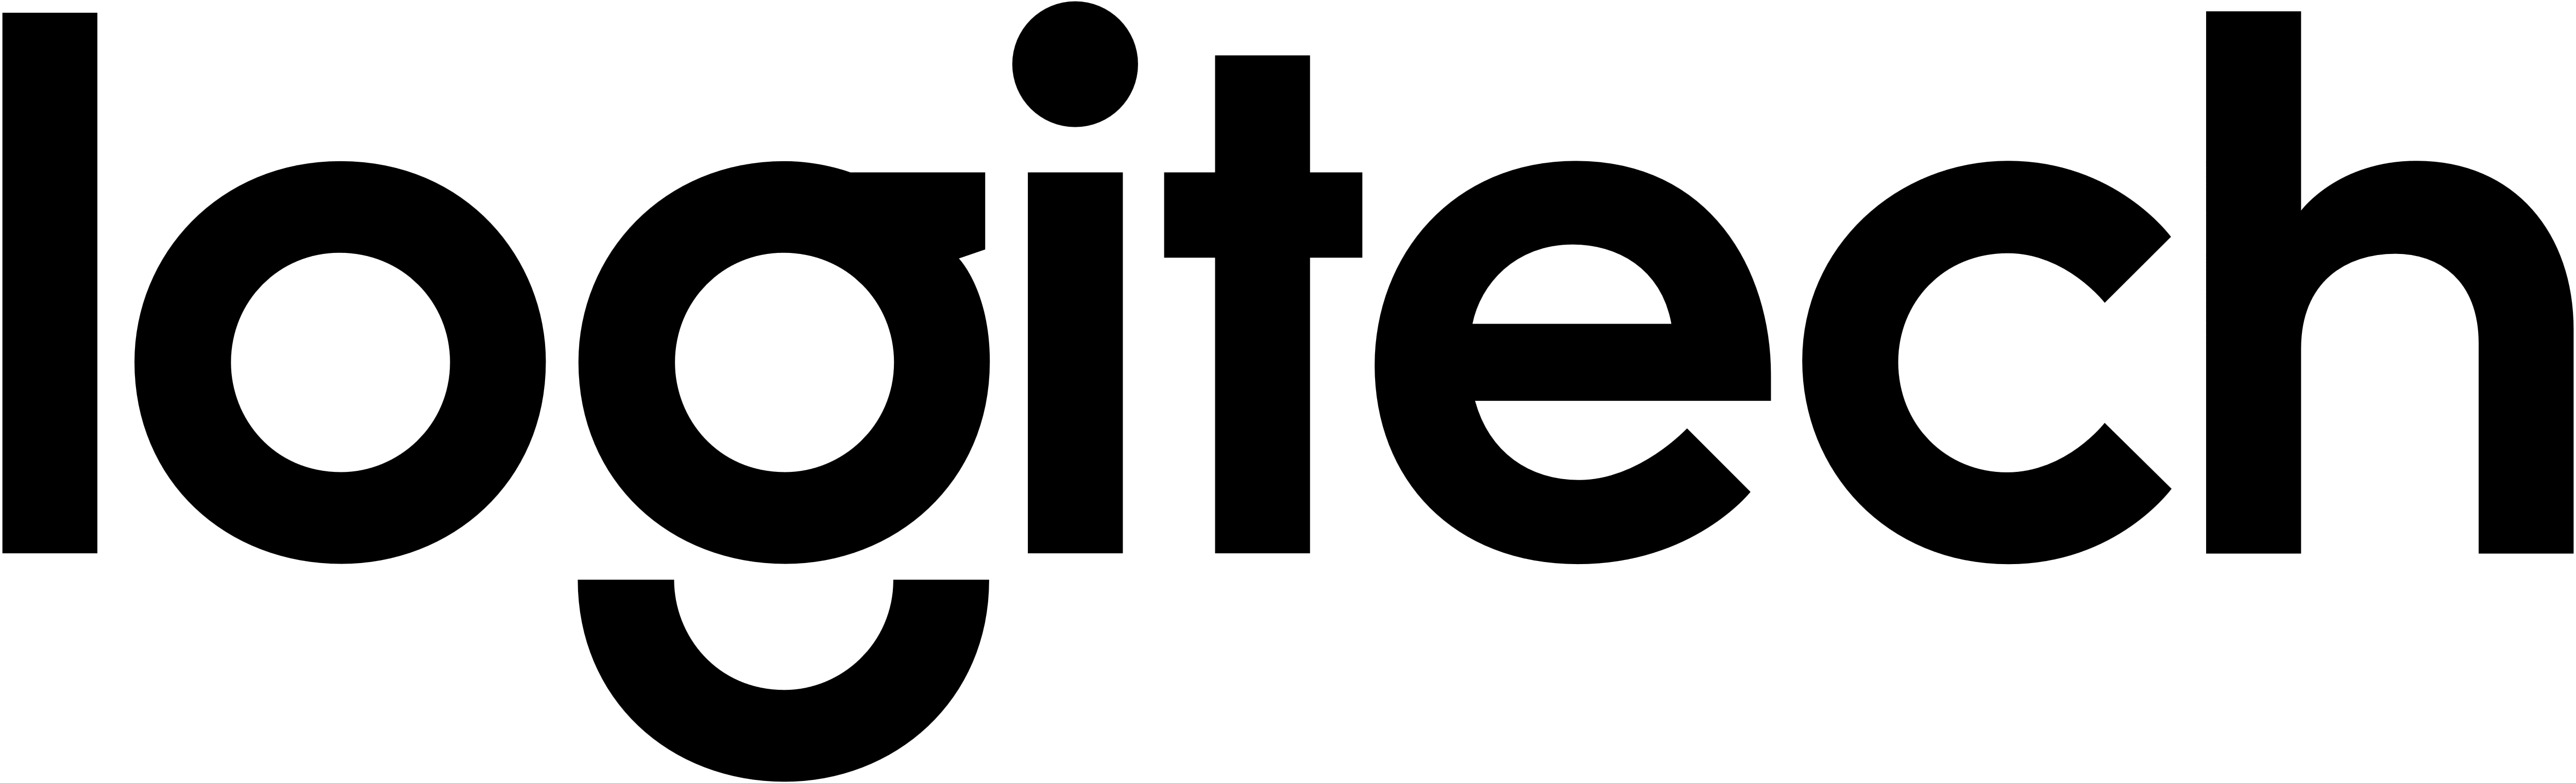 Logitech Logo PNG - 176183